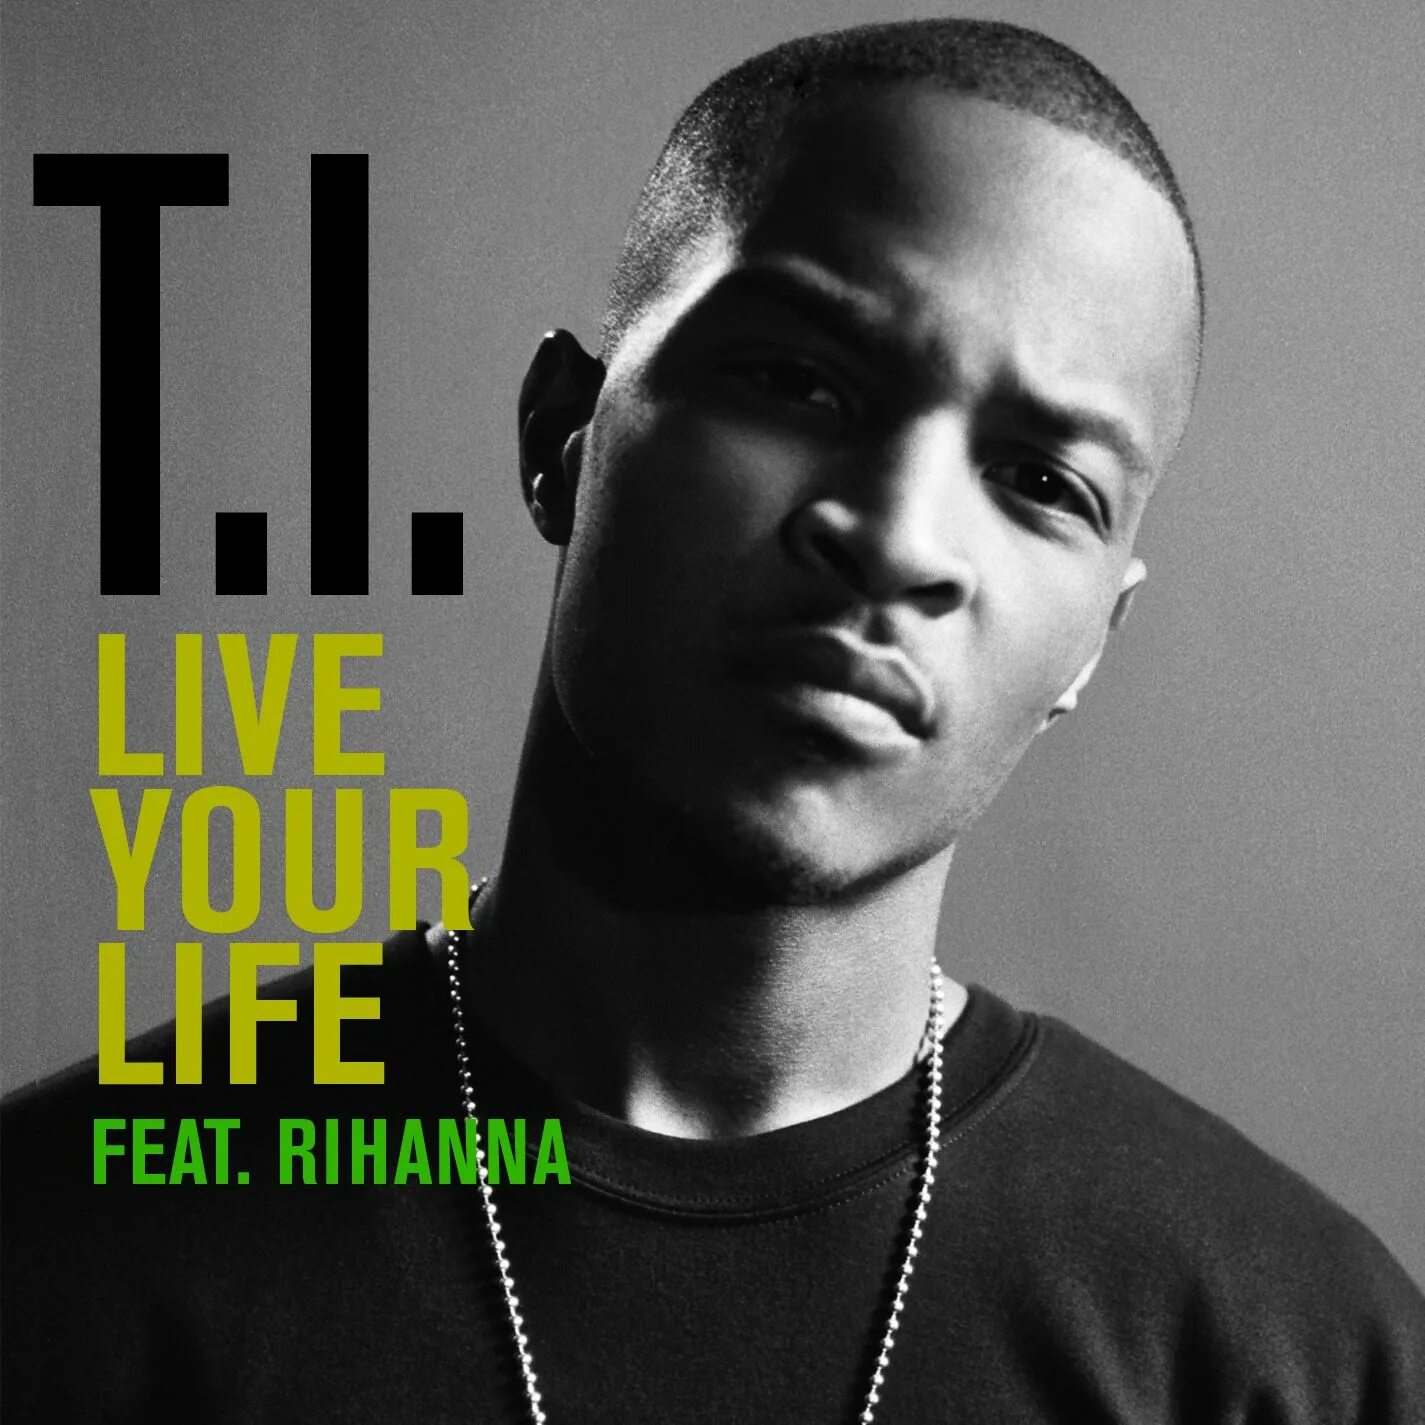 Live magazine. Rihanna t.i. Live your Life t.i.. Rihanna Live your Life. T.I. Live your Life featuring Rihanna.